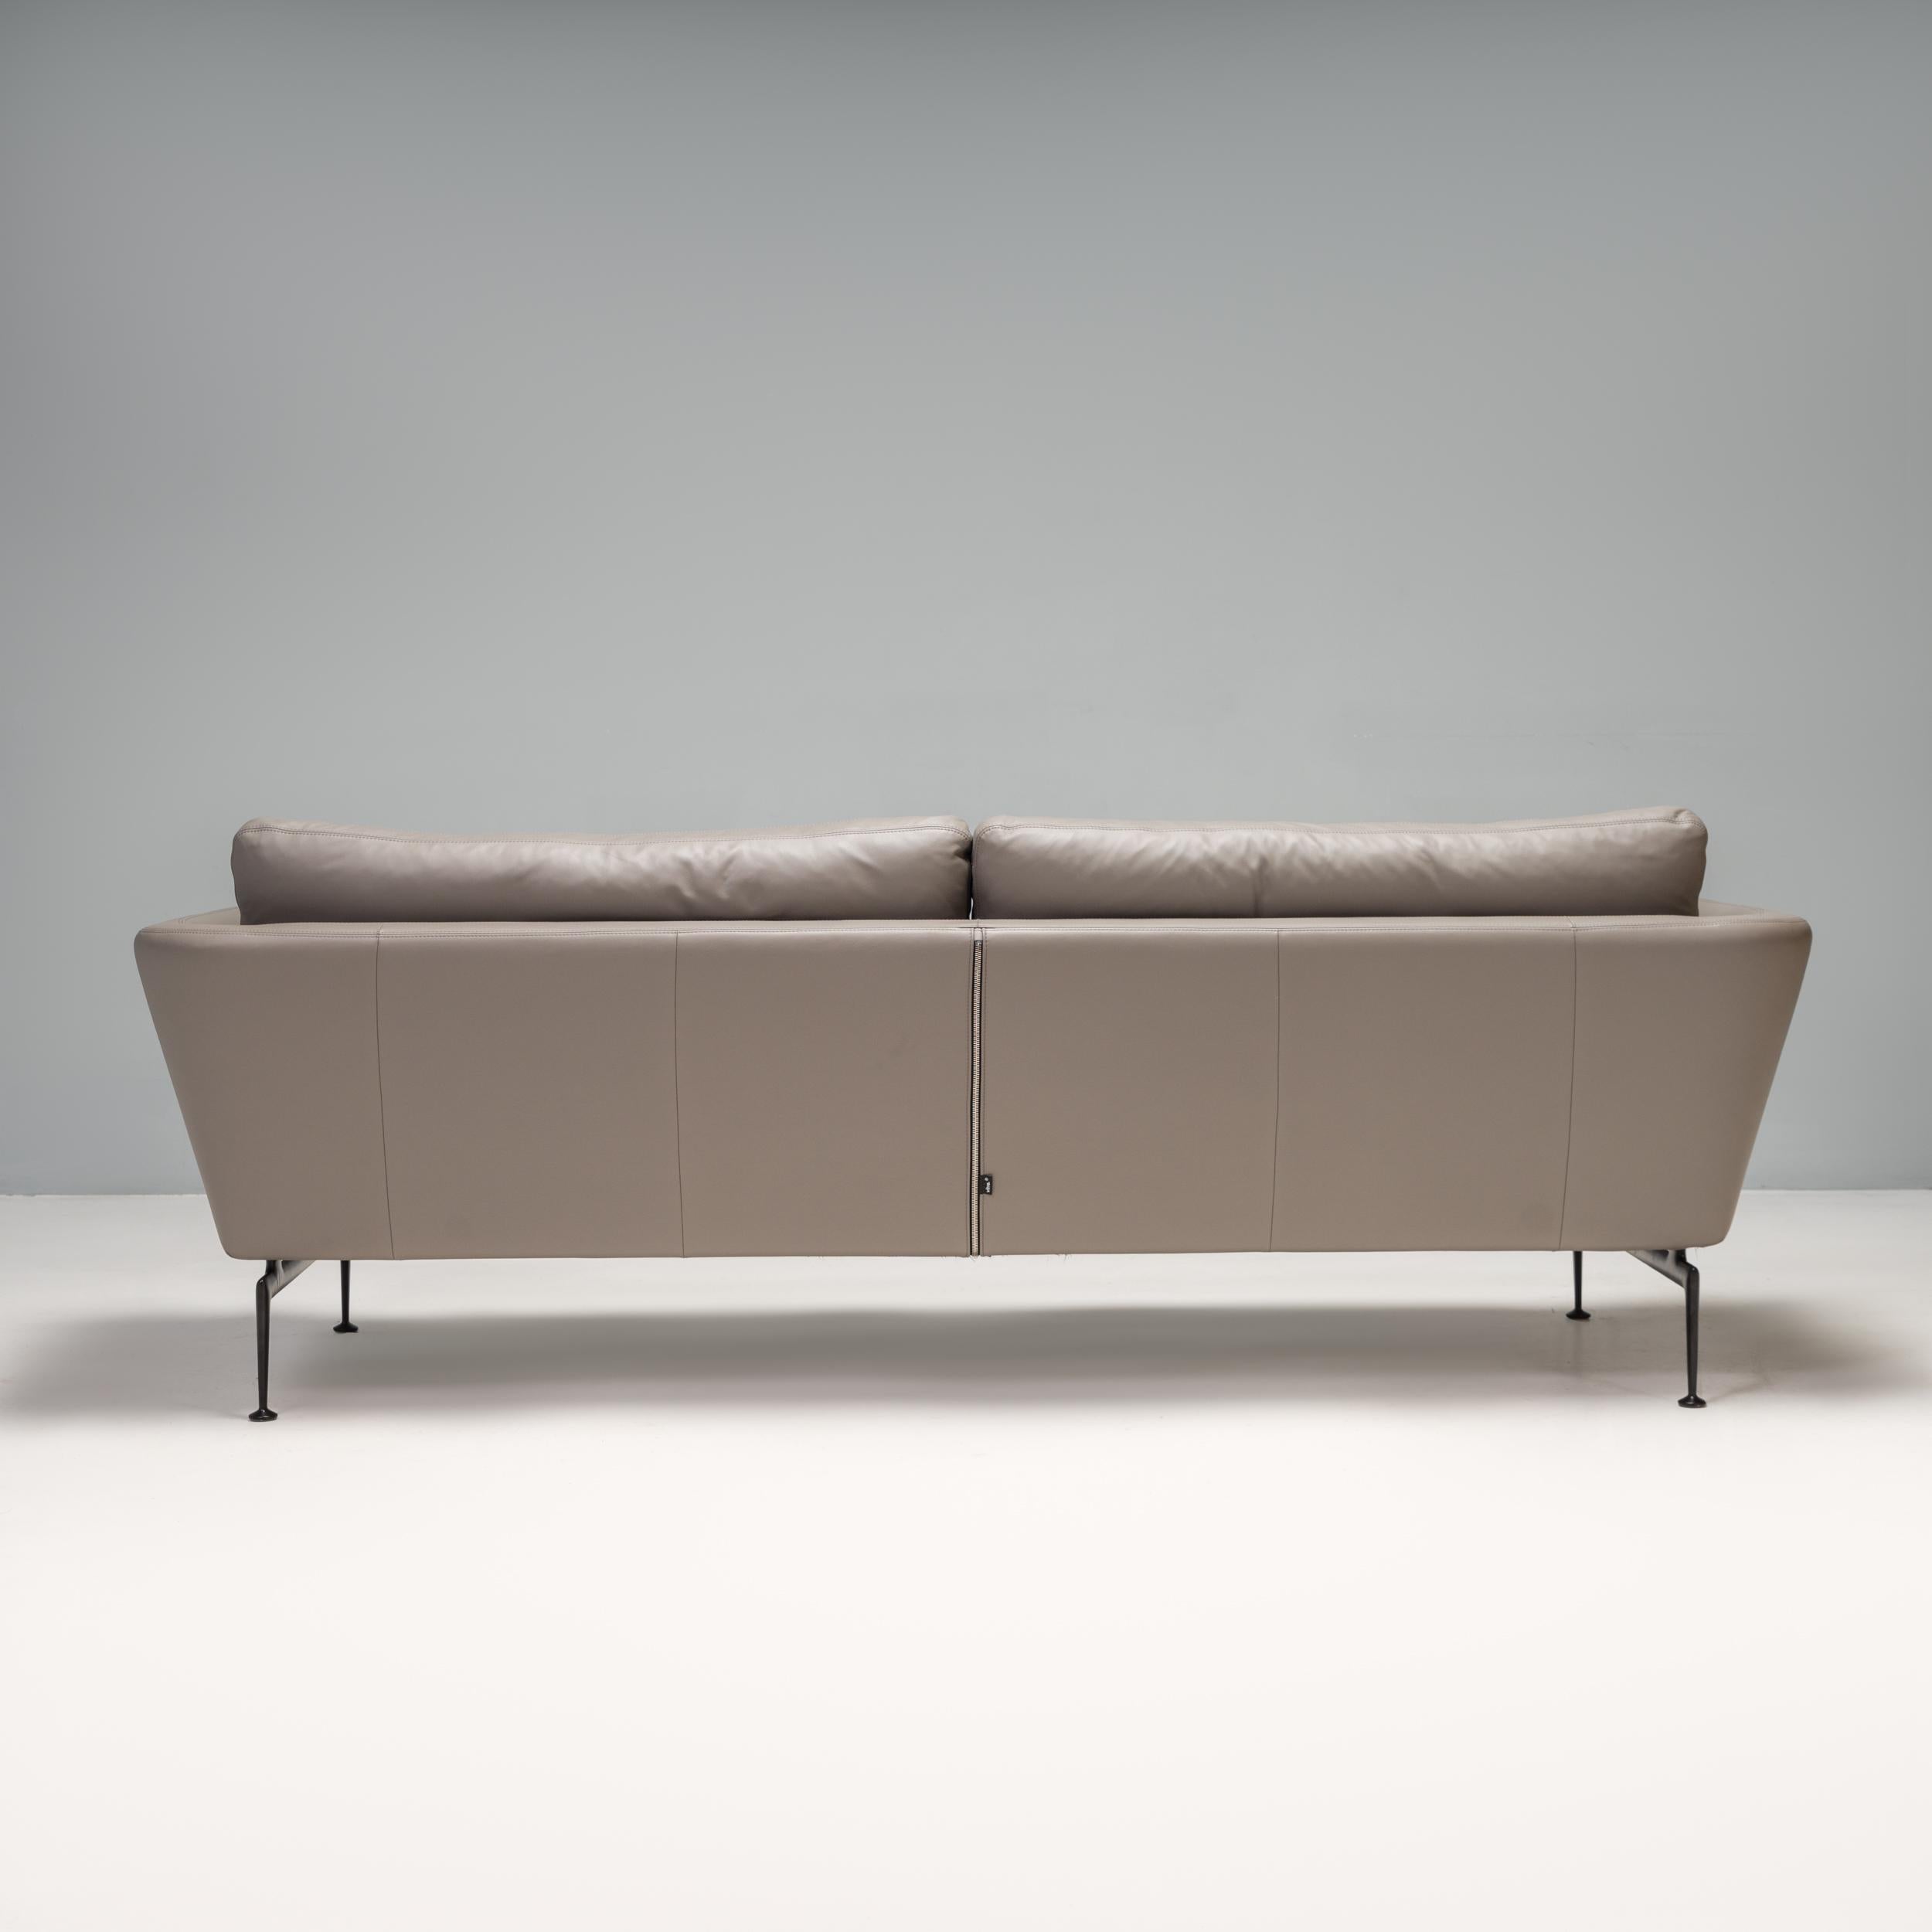 Antonio Citterio for Vitra Grey Leather Suita Three-Seat Sofa, 2021 In Good Condition For Sale In London, GB